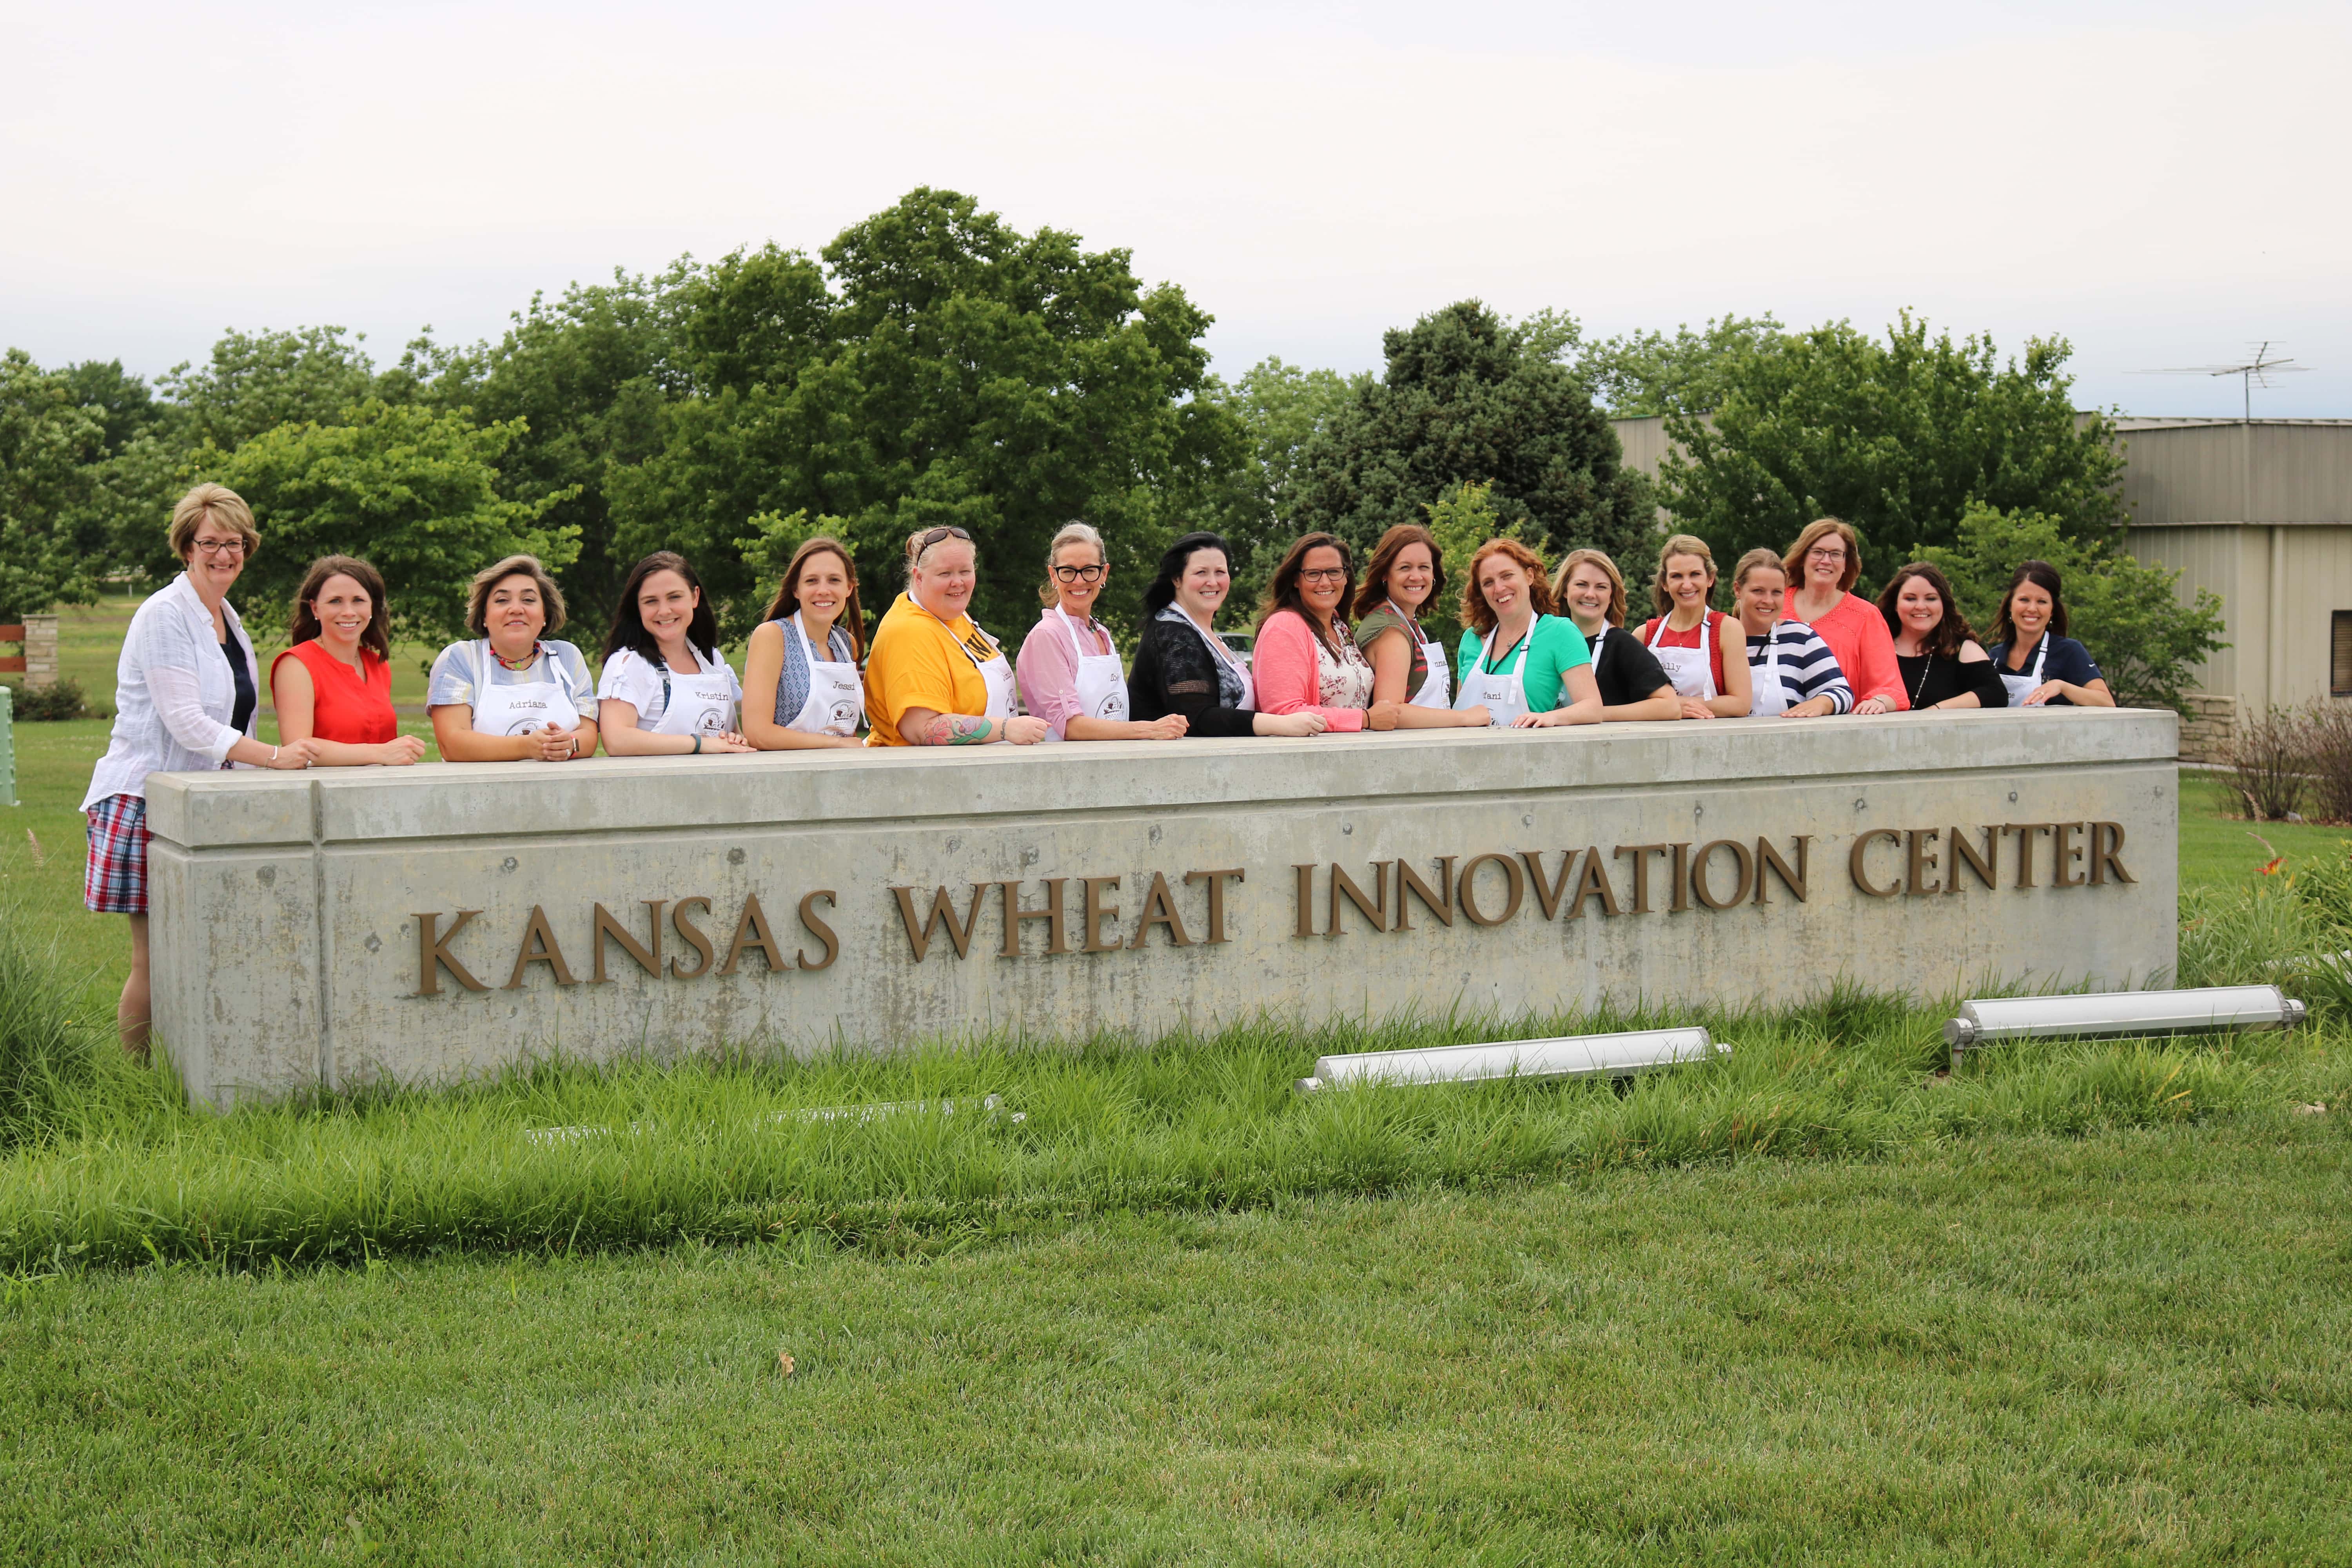 Kansas Wheat Innovation Center Wheat 2 Bread Tour